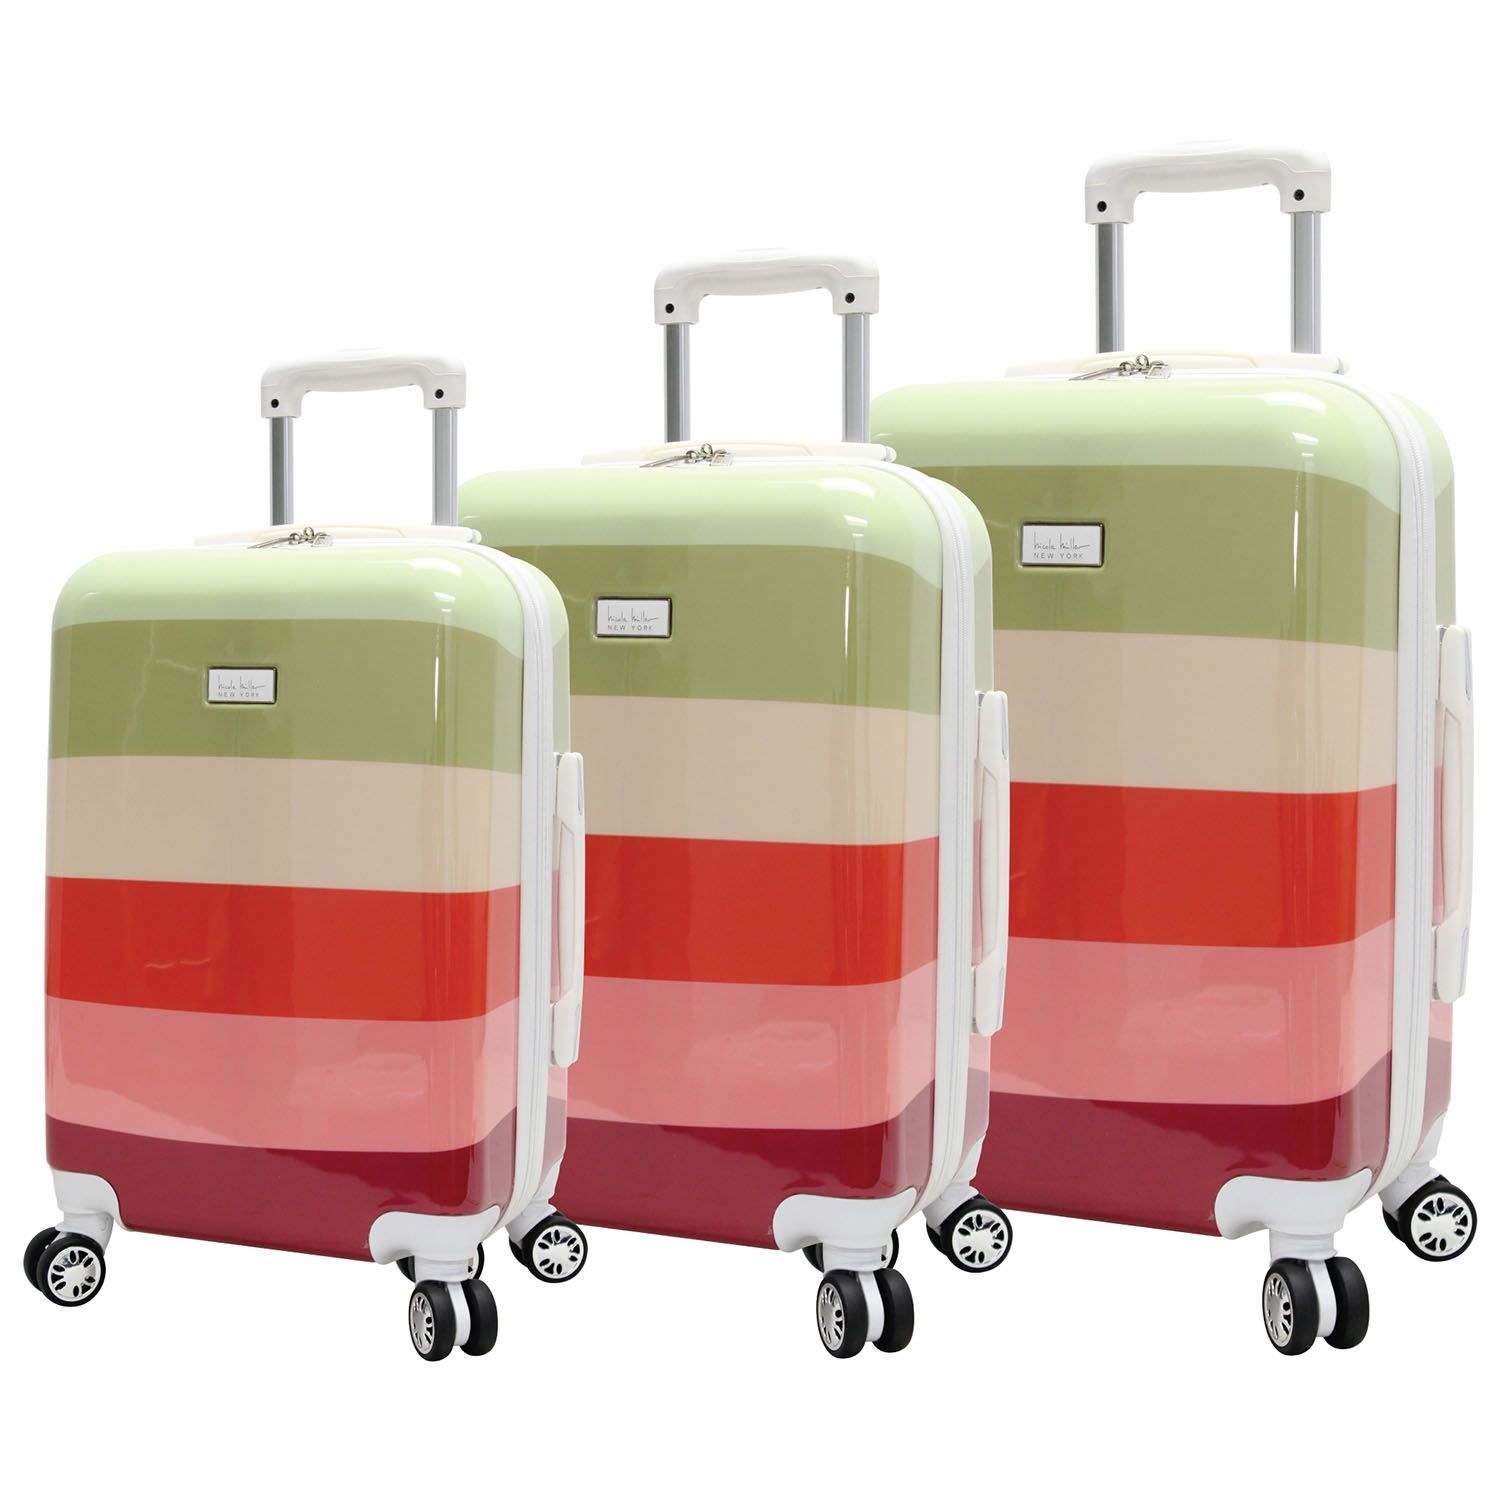 An image of three-piece hard side rainbow luggage set